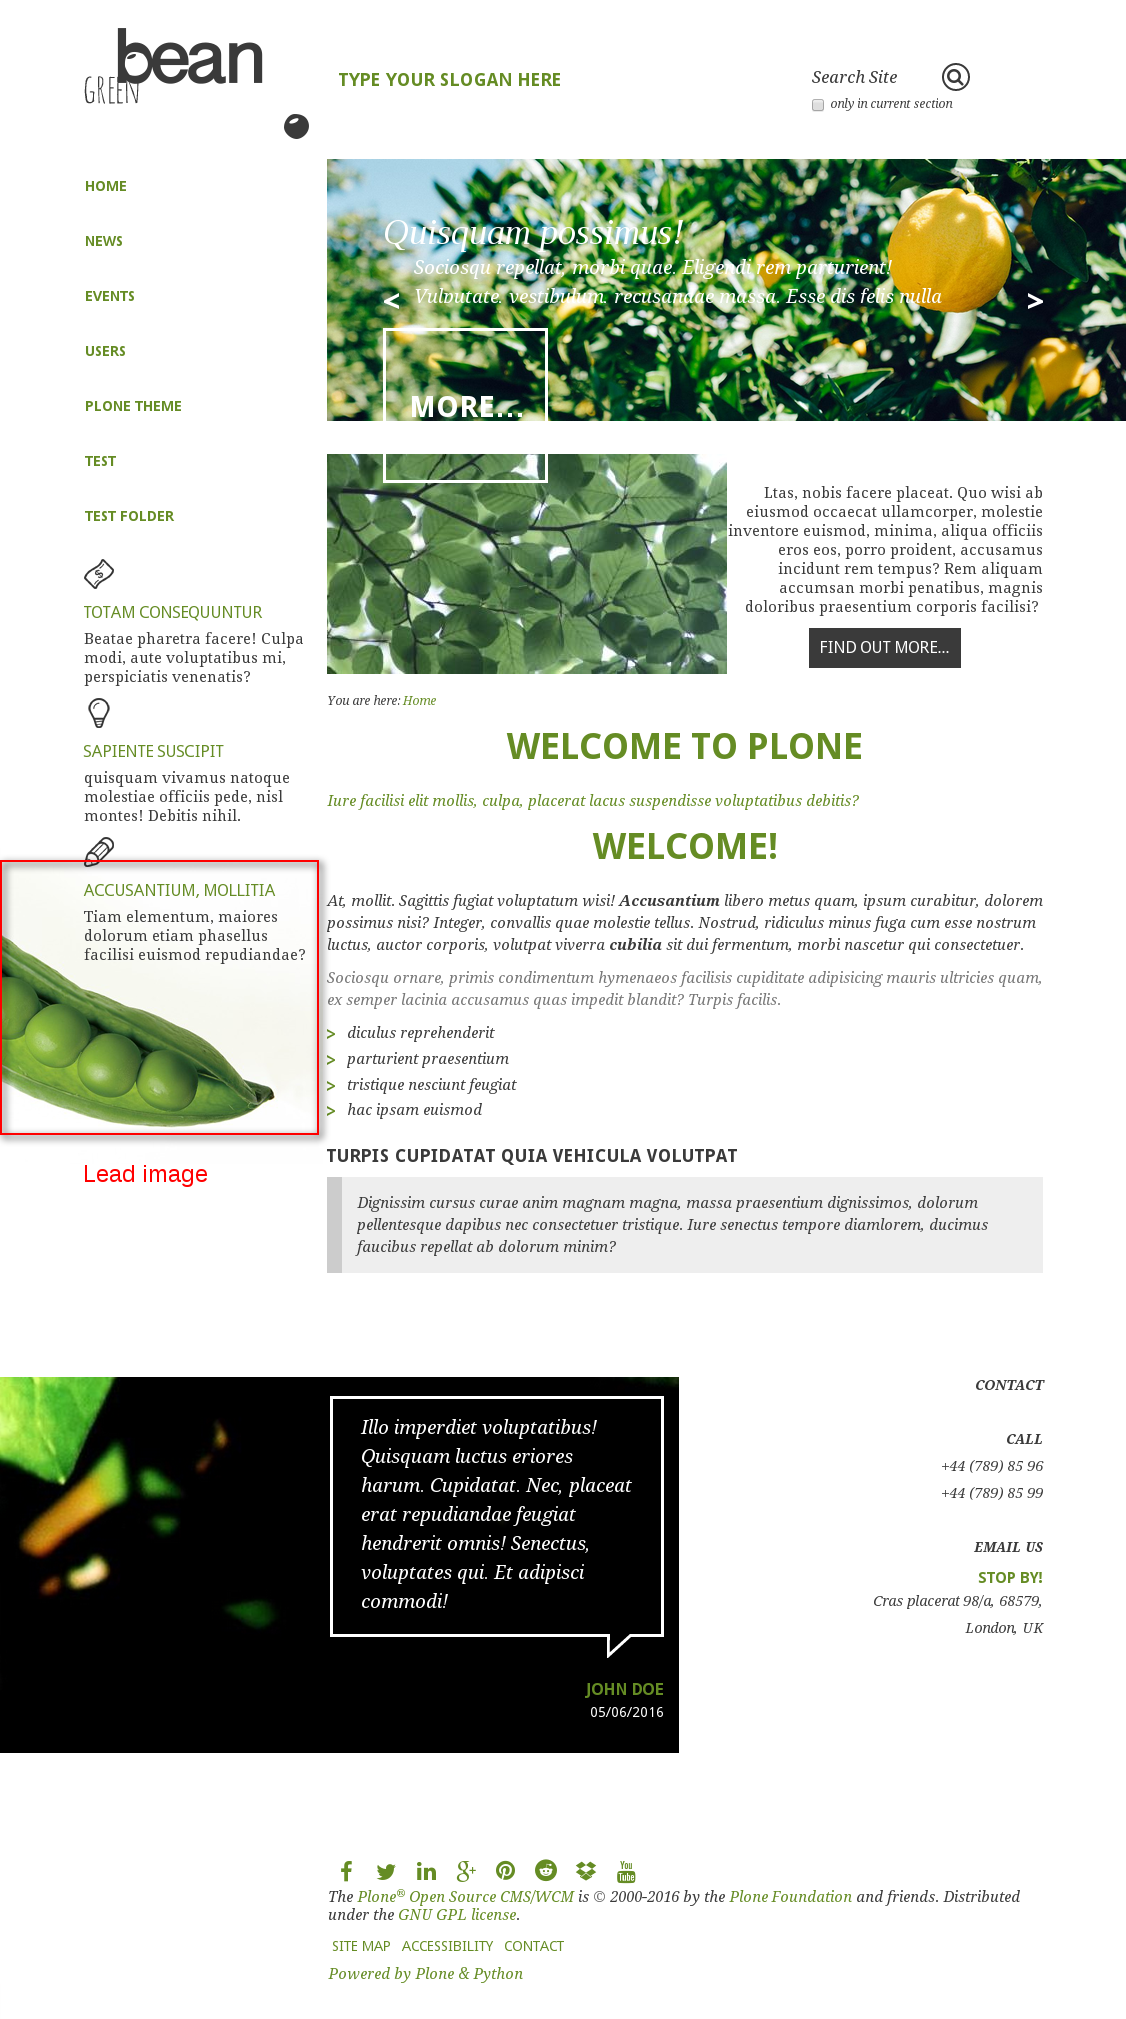 Green Bean Plone theme lead image